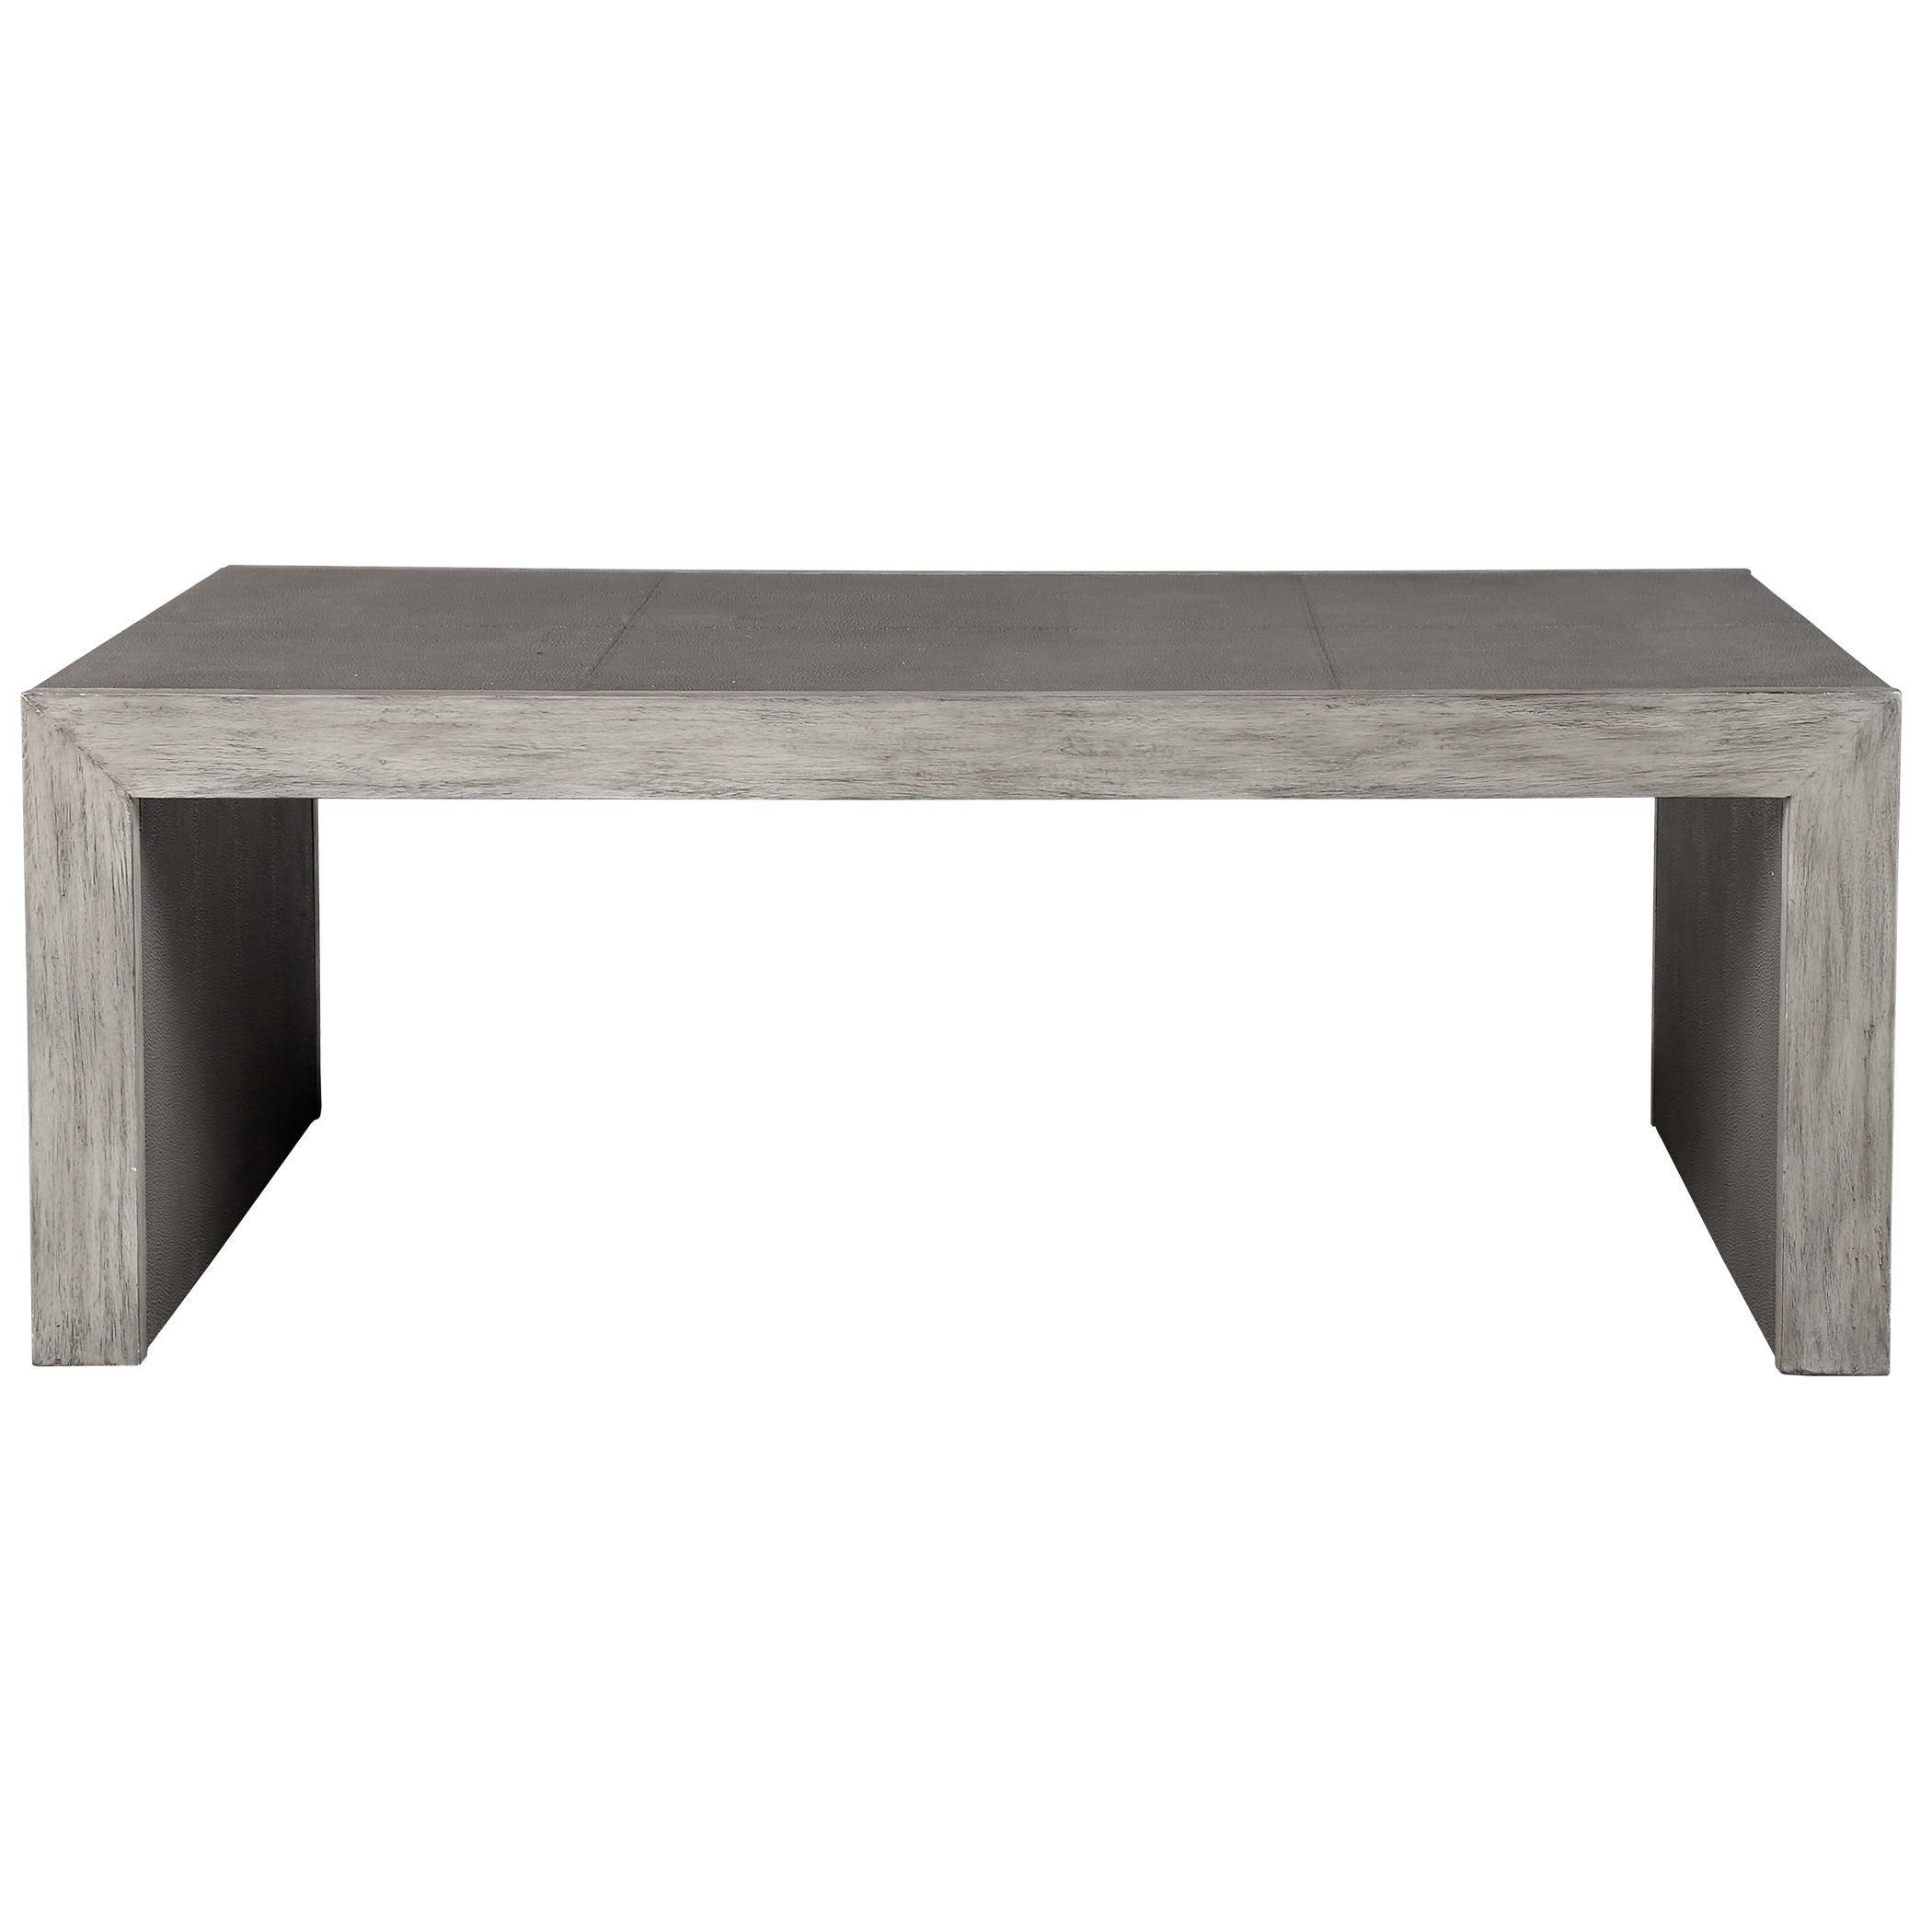 Aerina - Modern Coffee Table - Gray